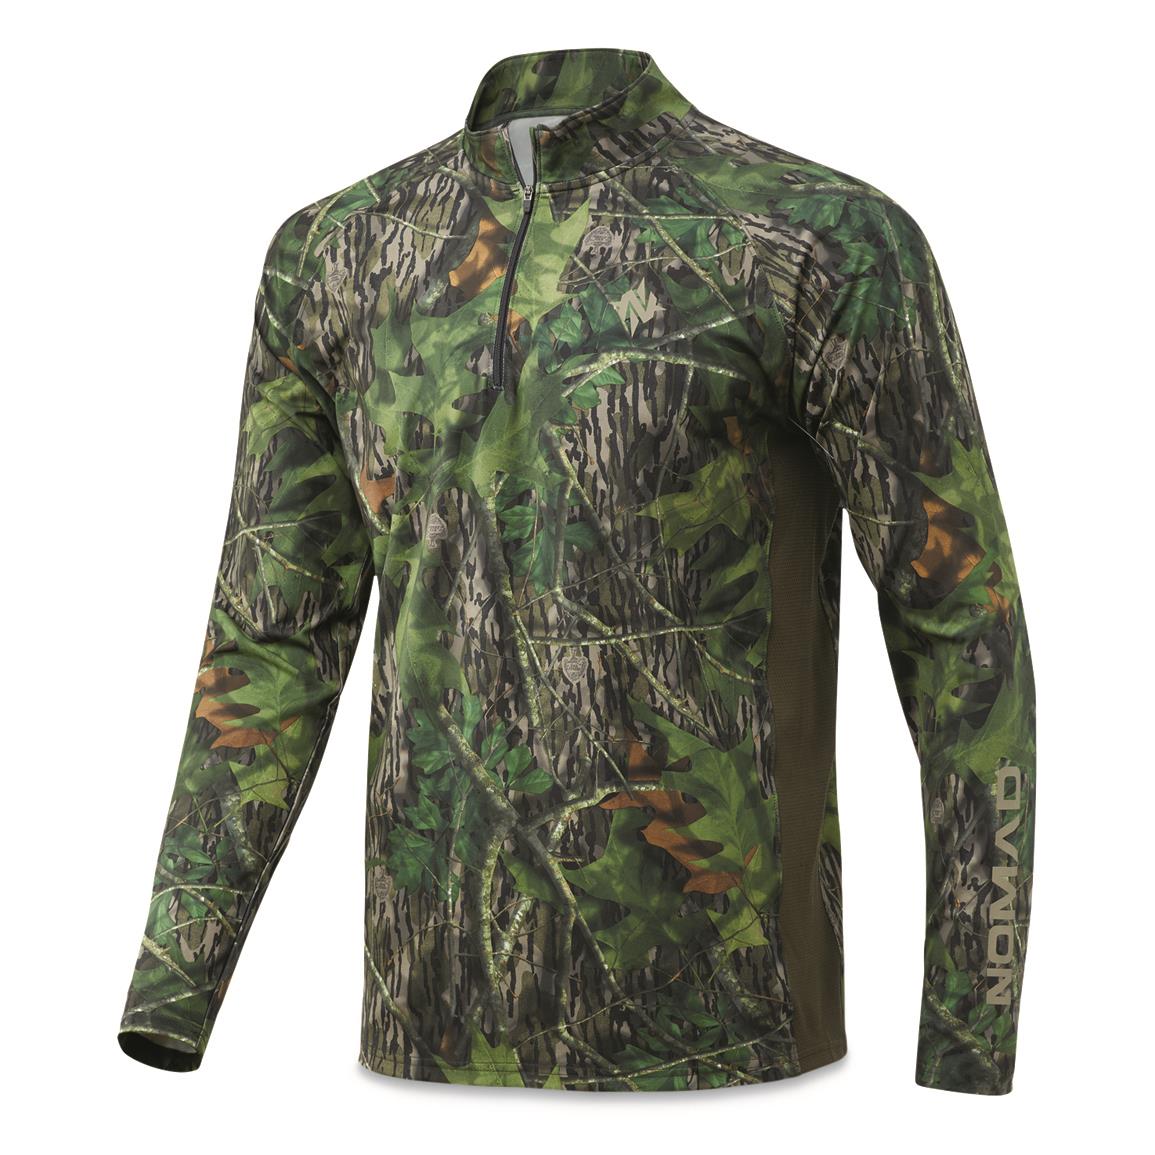 NOMAD Men's Pursuit Quarter-Zip Camo Hunting Shirt, Mossy Oak Shadowleaf